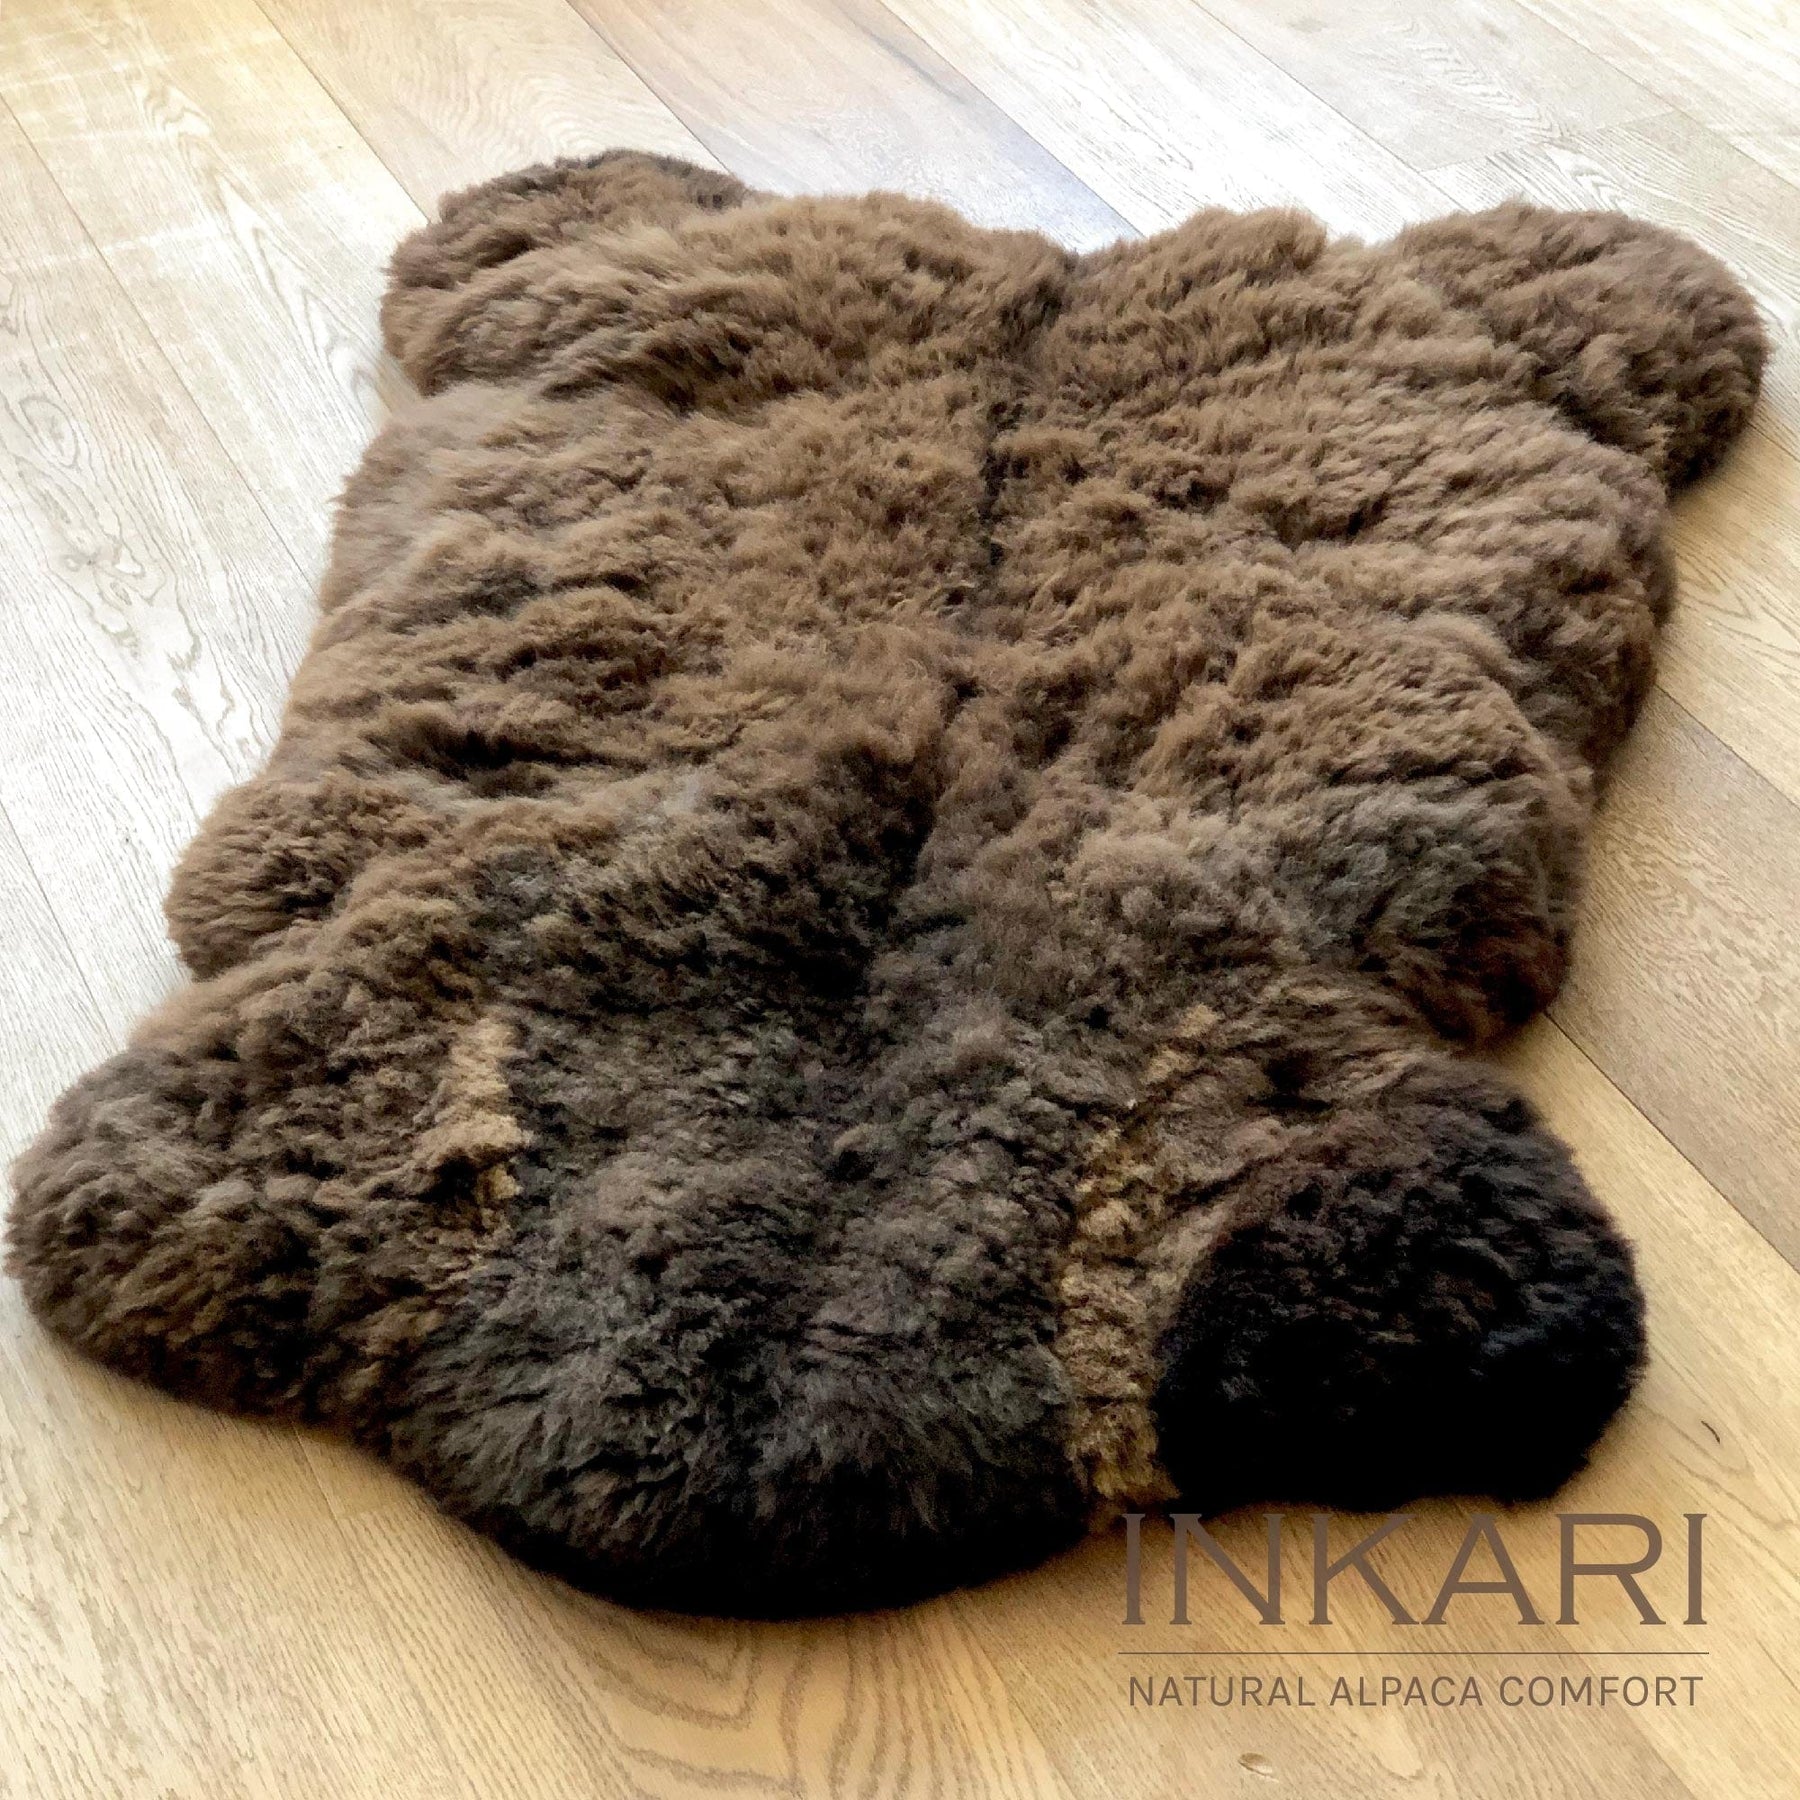 Reina - Handmade Alpaca Rug - Cacao - alpaca wool - alpaca products & gifts - handmade - fairtrade gifts - by Inkari